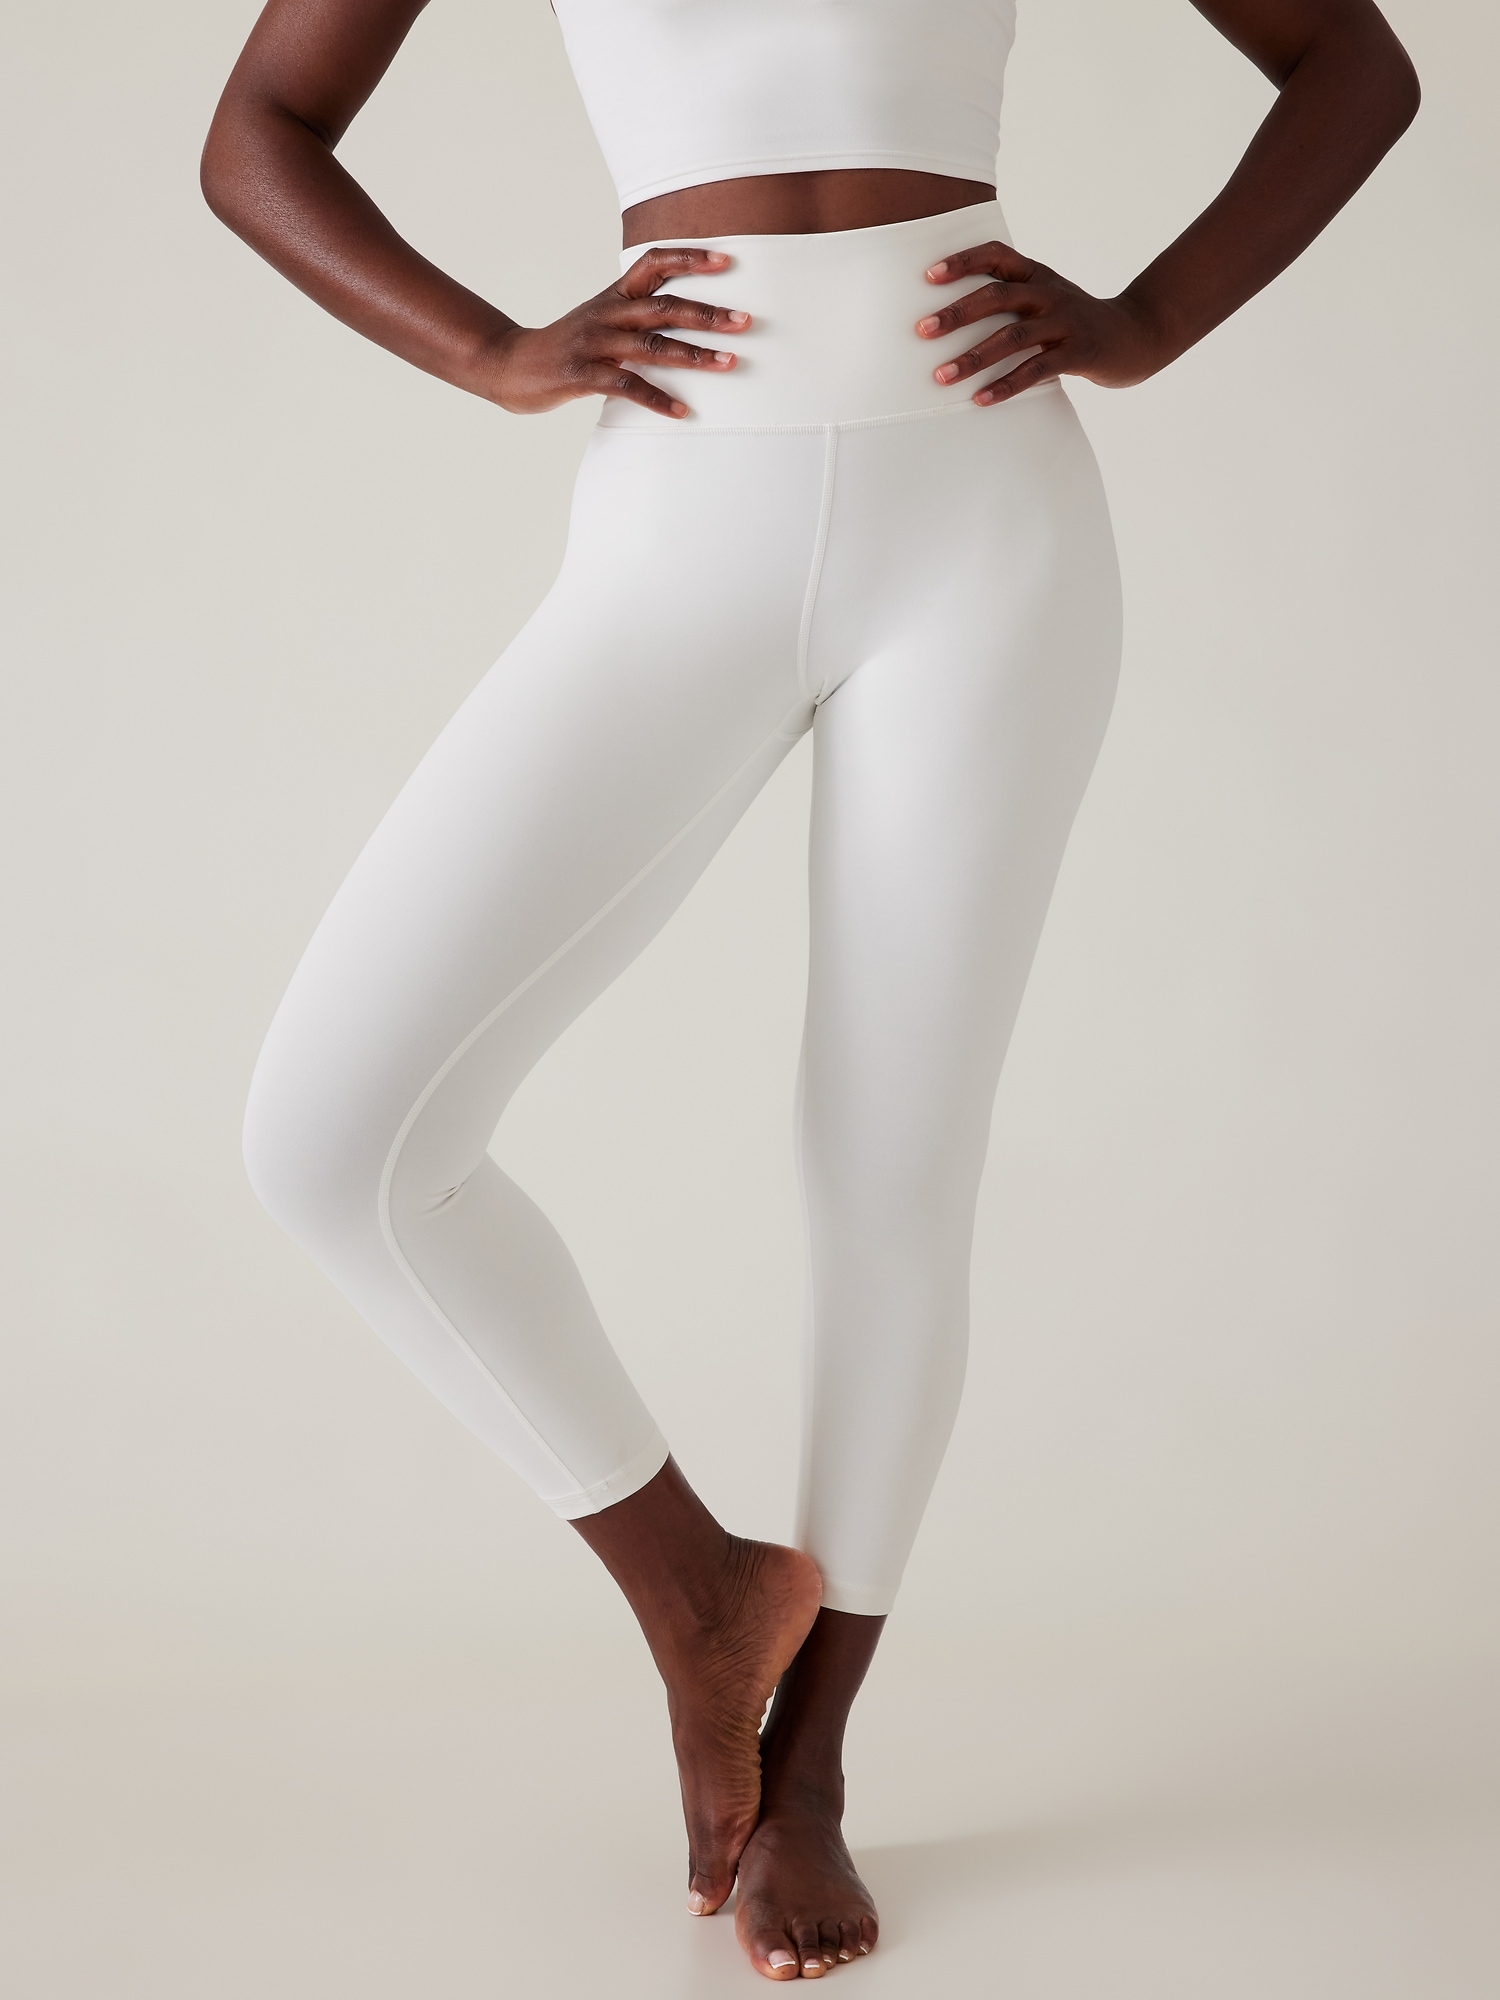 White Leggings / White Yoga Pants / Workout Tights / Yoga Clothes / High  Waisted Legging / White Dance Pants / Extra Long Leggings 